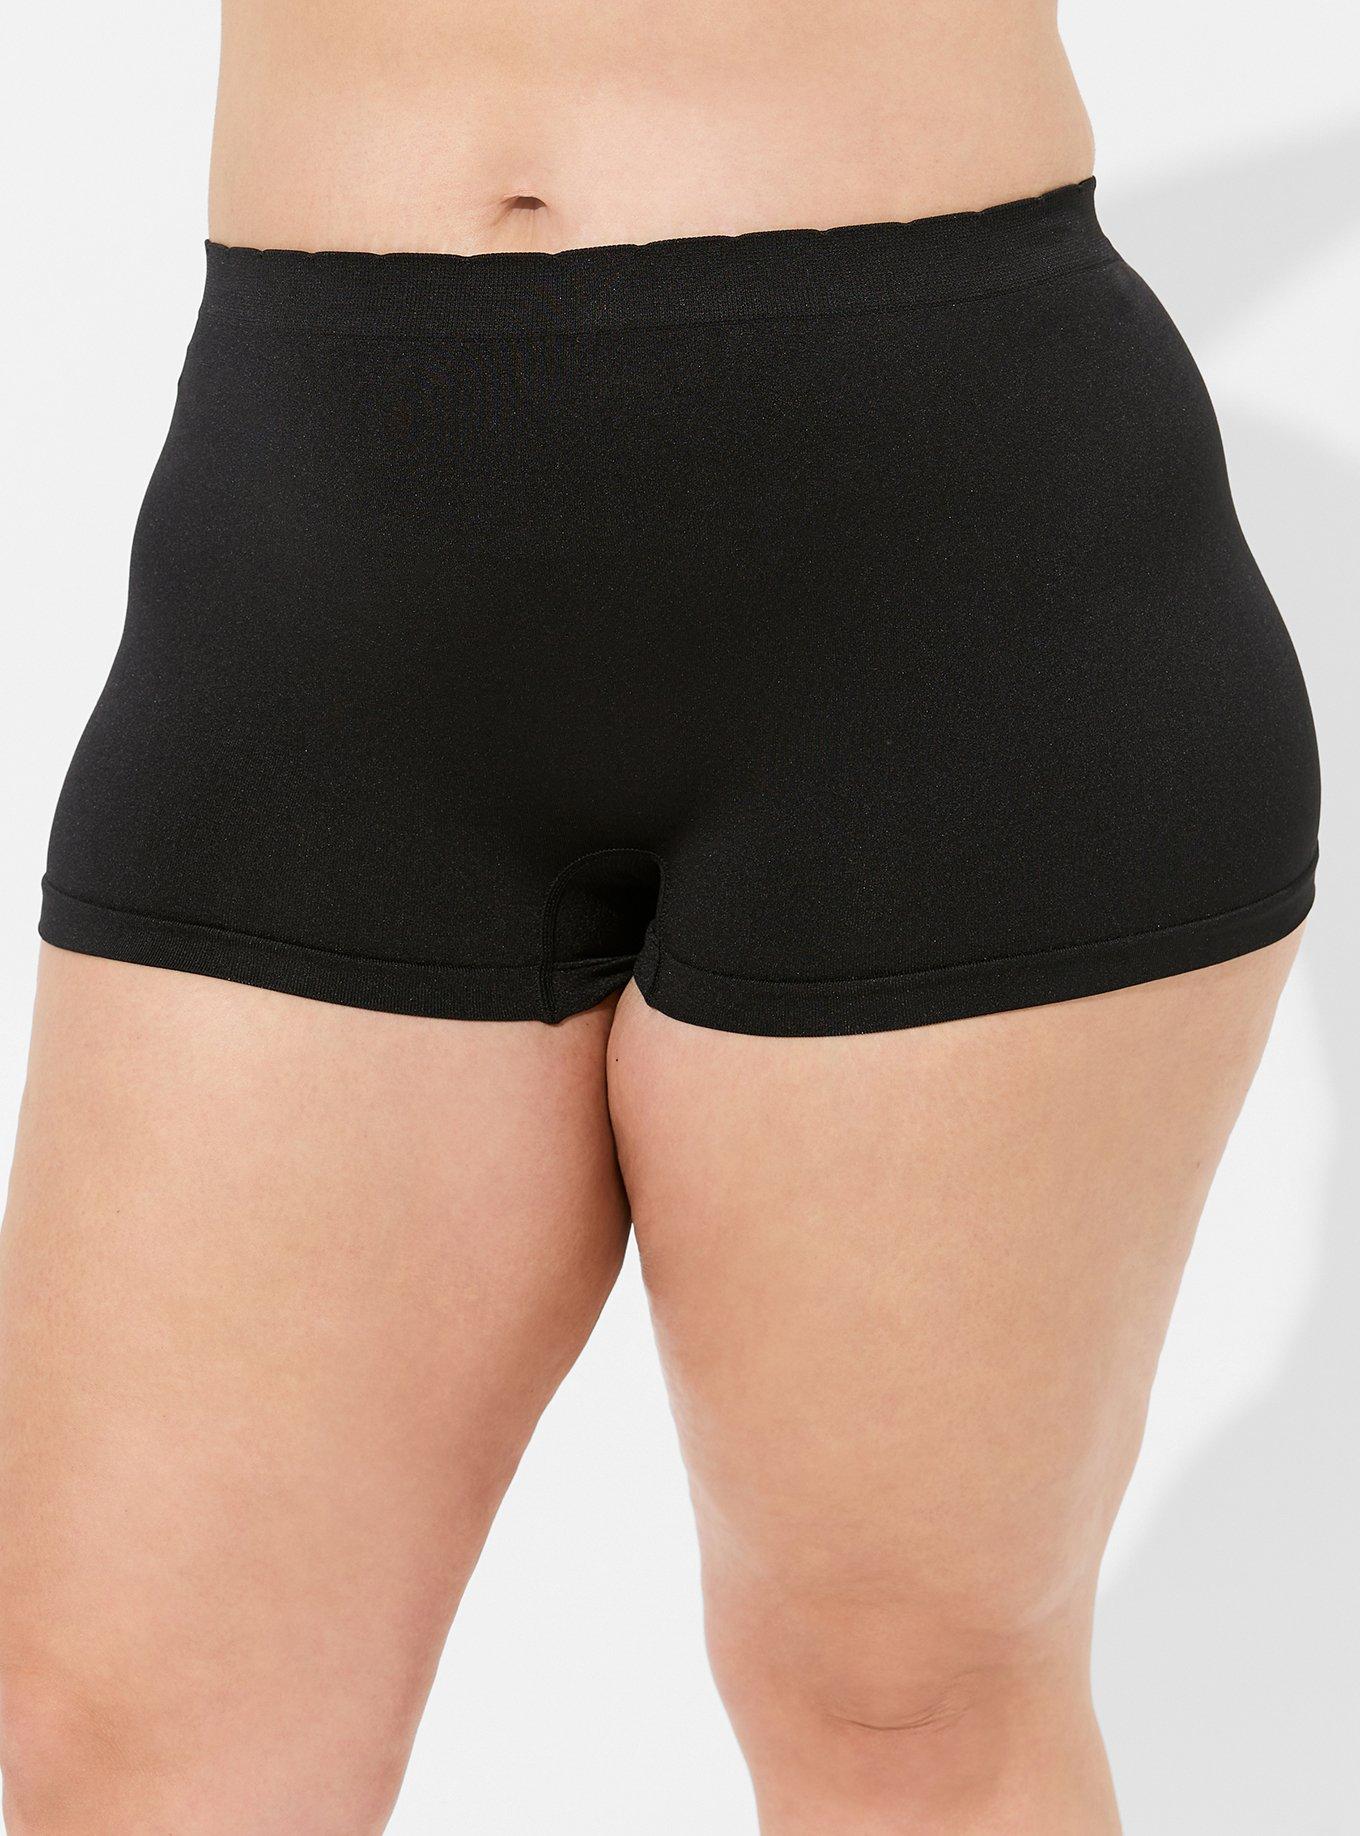 Ladies Skin Tight Flexible Denim Look Shorts Hot Panties Underwear Boxer  Briefs